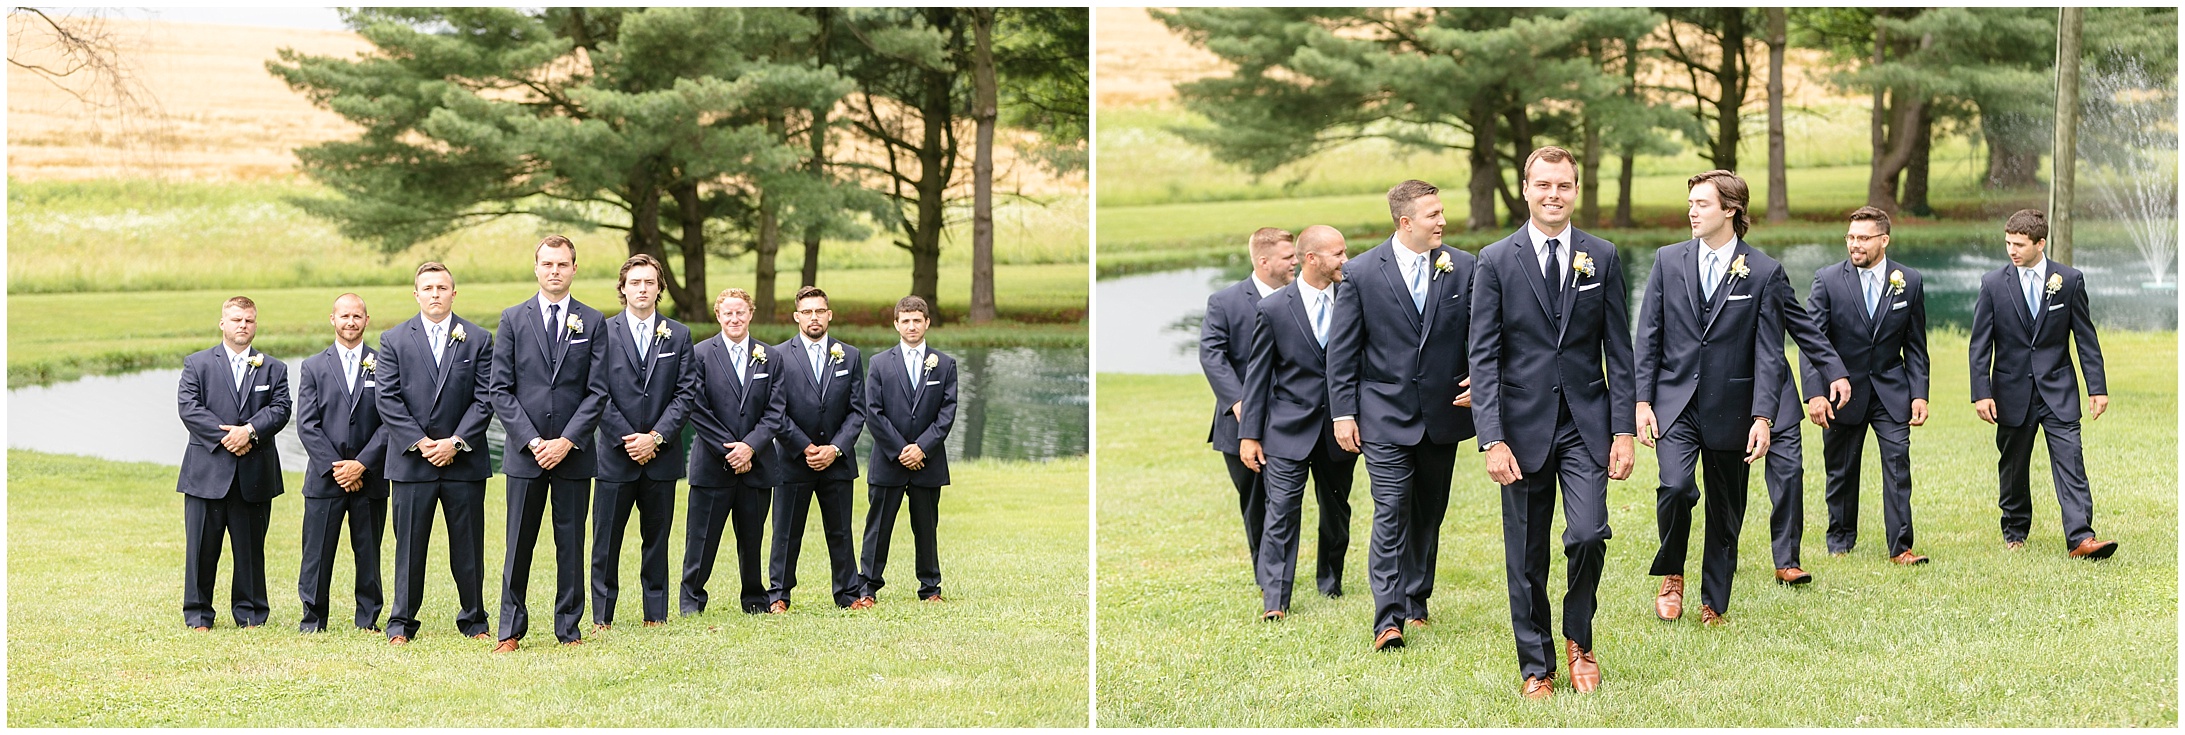  Love these groomsmen photos! 